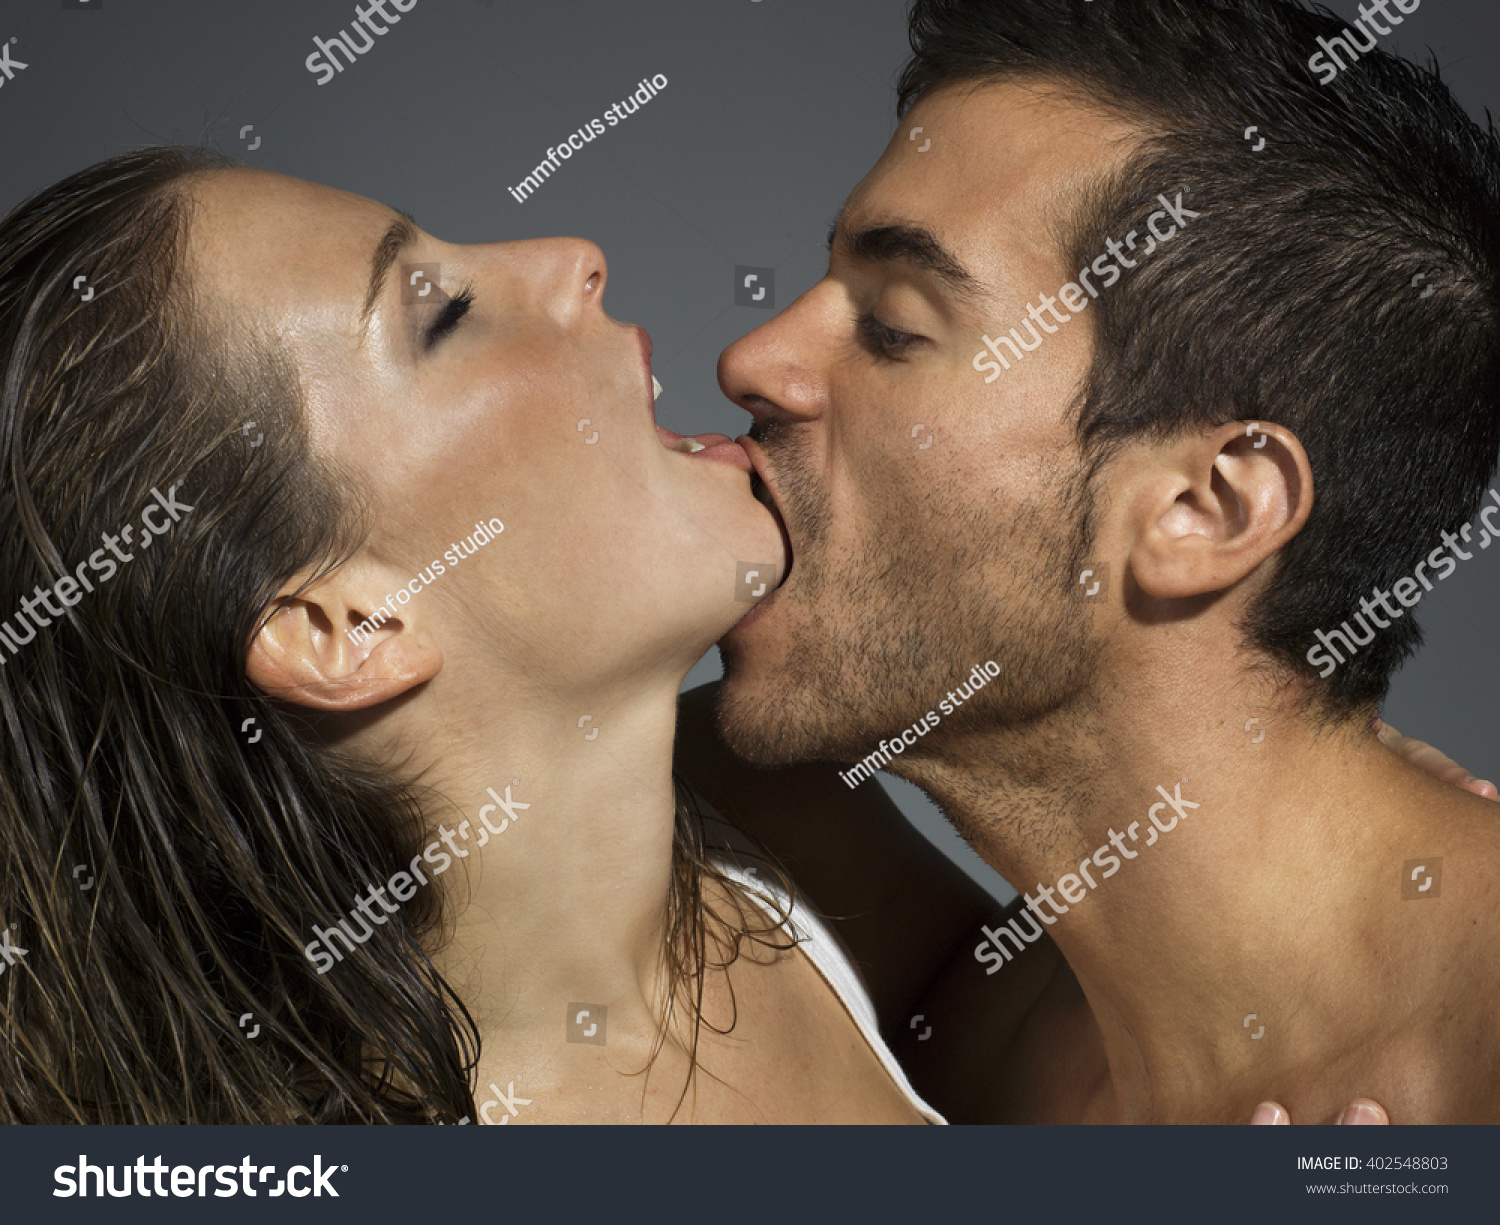 arpit didwania share erotic kiss pic photos